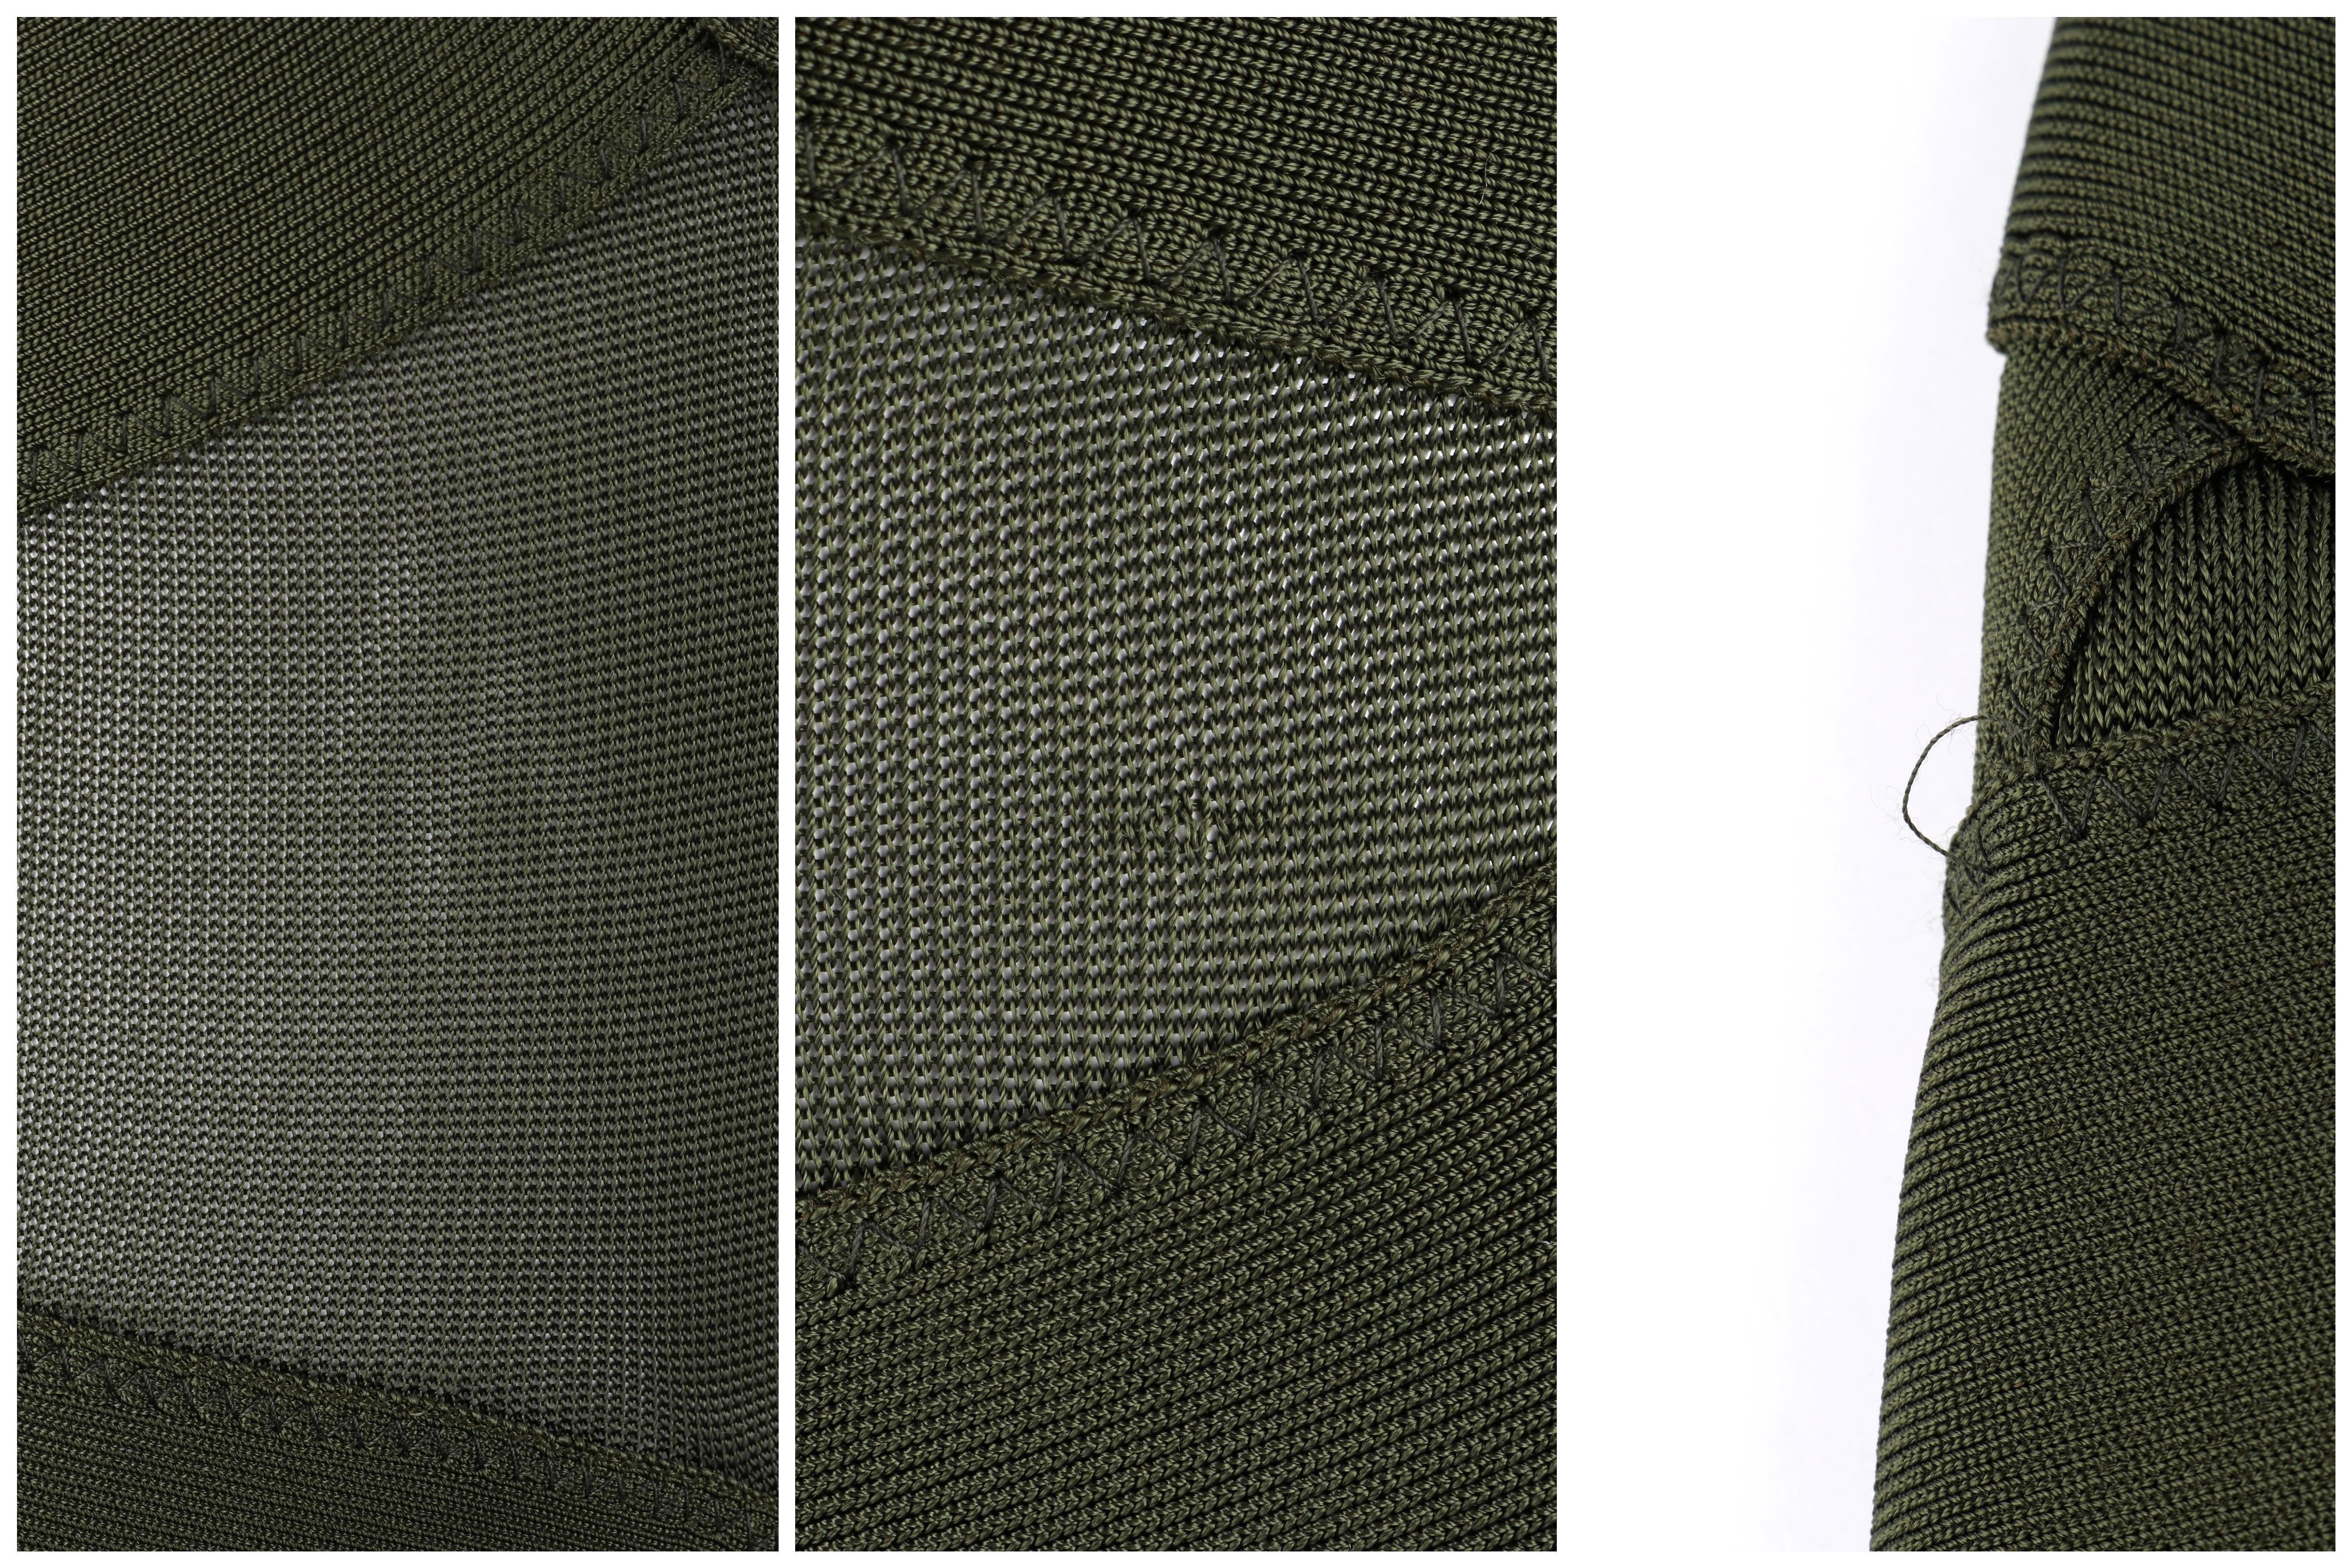 ALEXANDER McQUEEN S/S 2006 “Neptune” Green Pleated Bandage Cutout Halter Dress 2